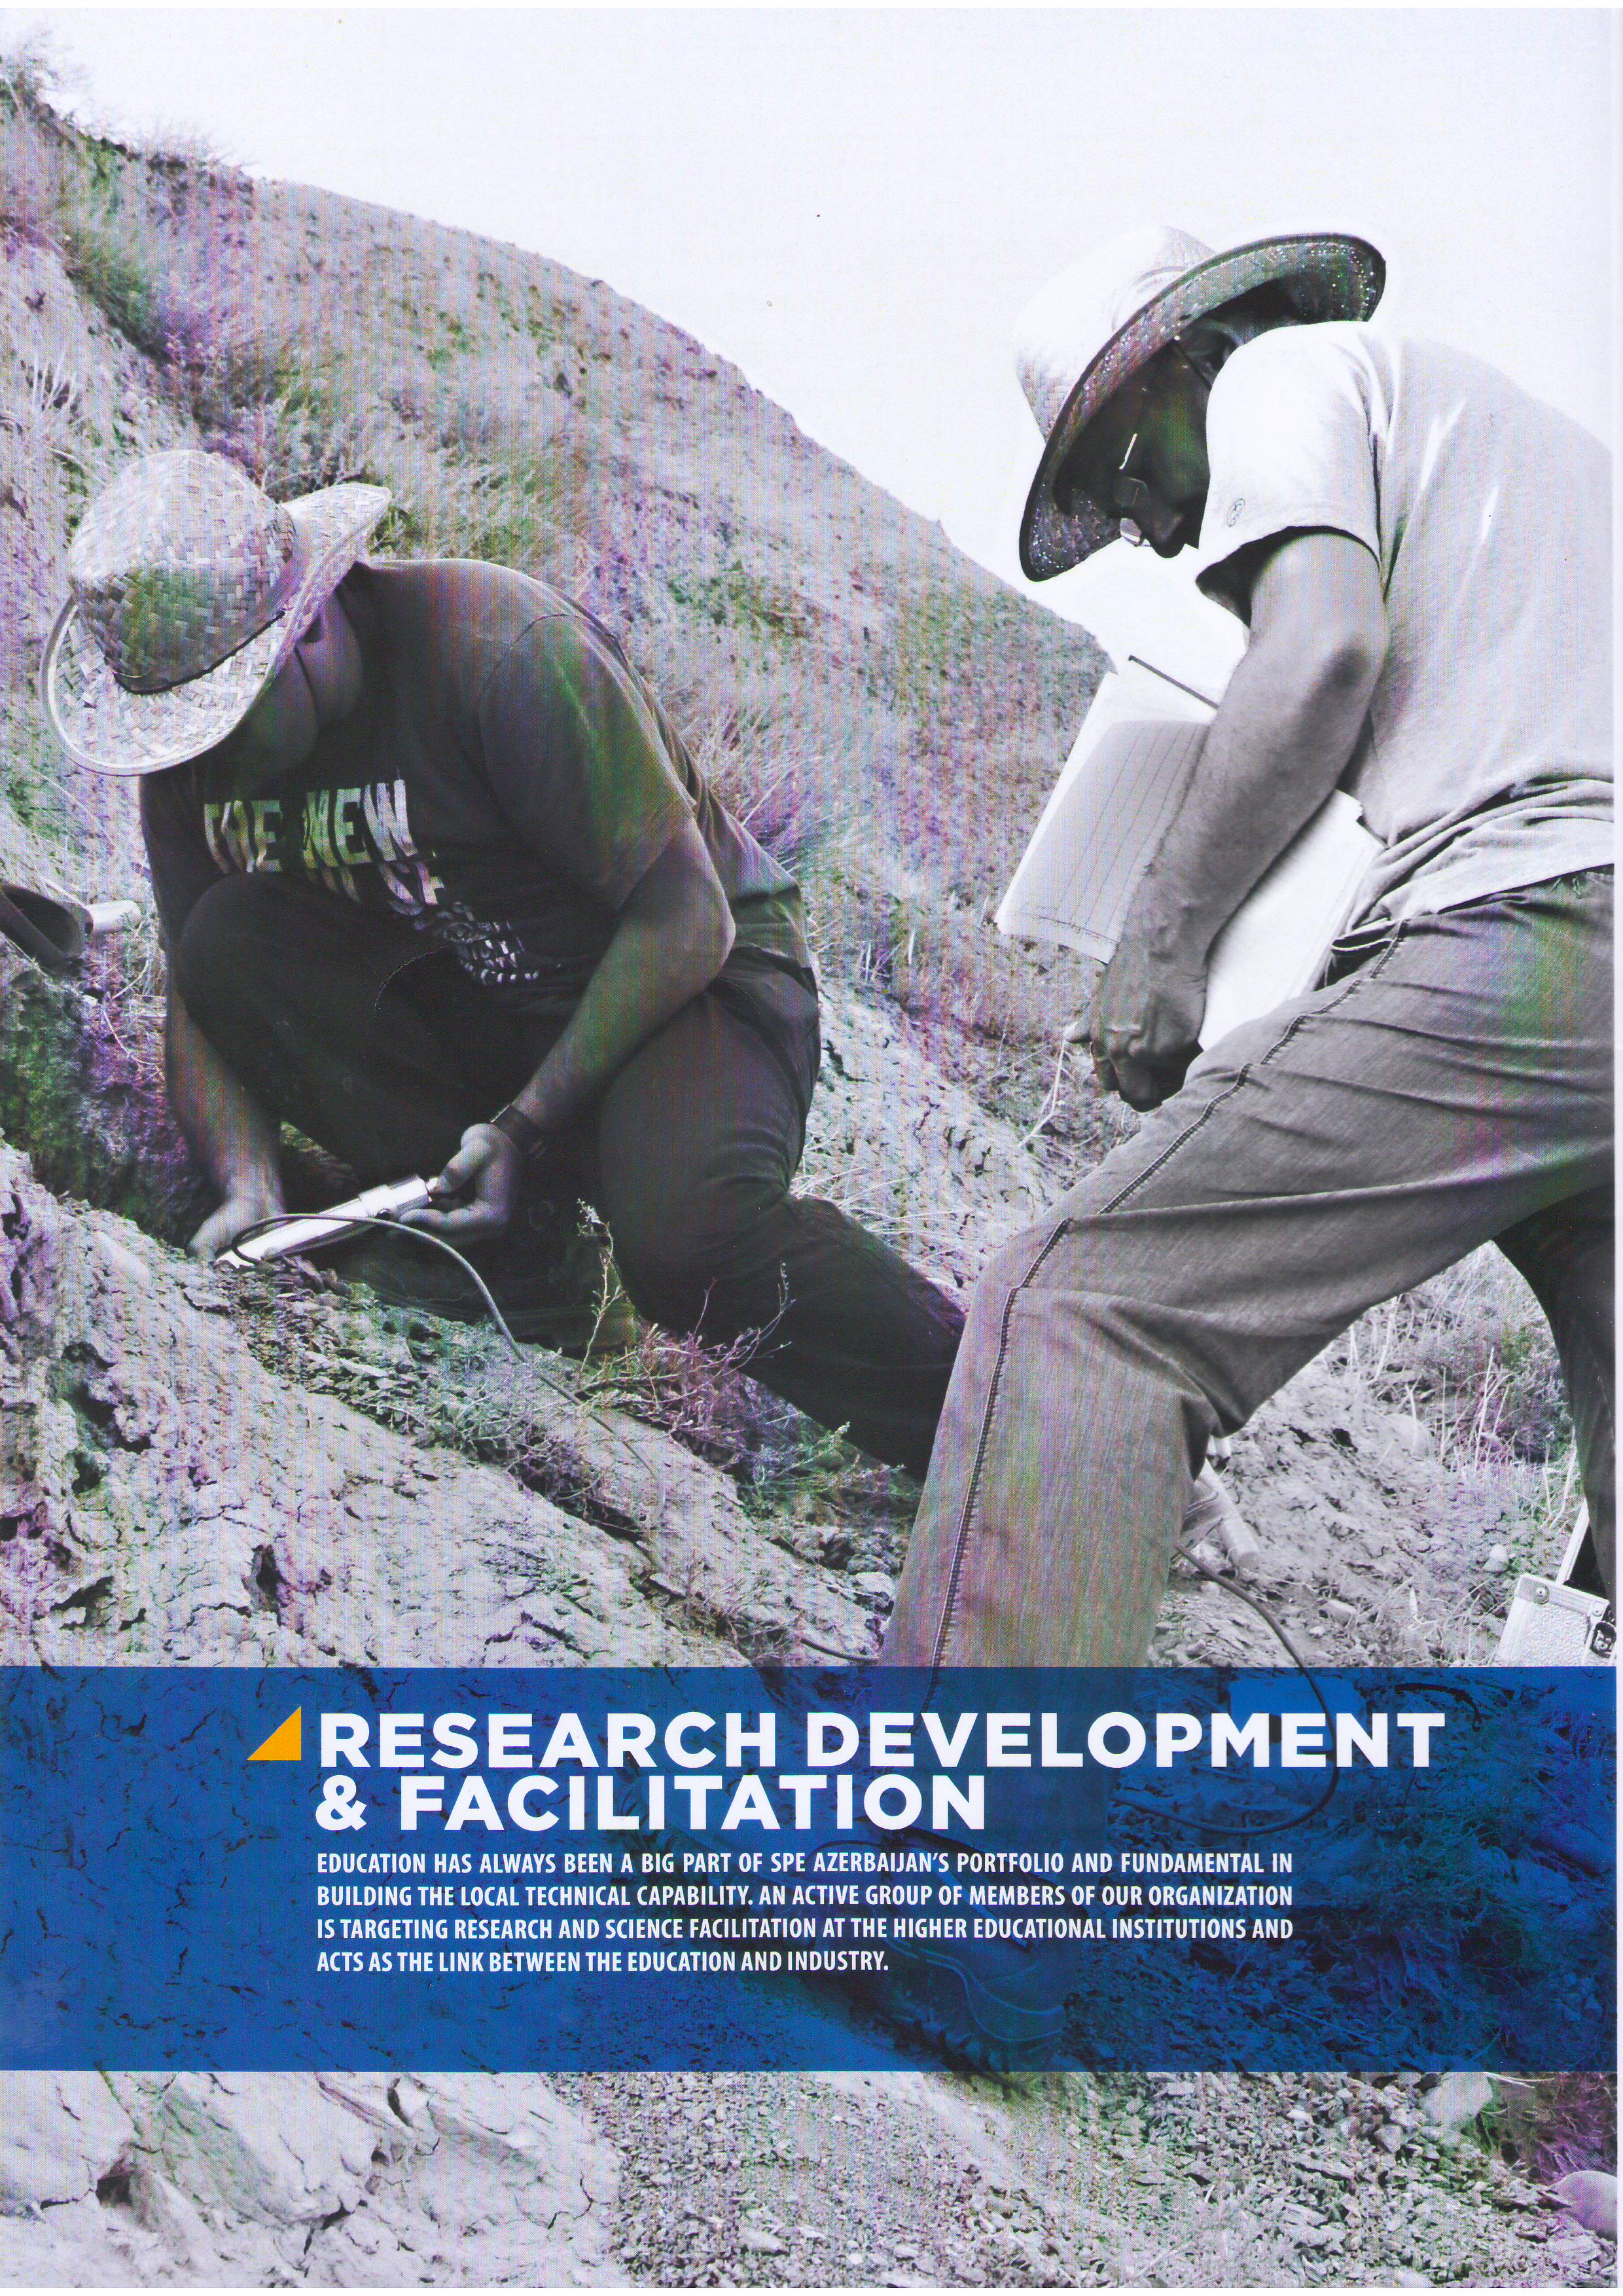 Khazar University Research Development Center Highlighted in SPE Annual Report